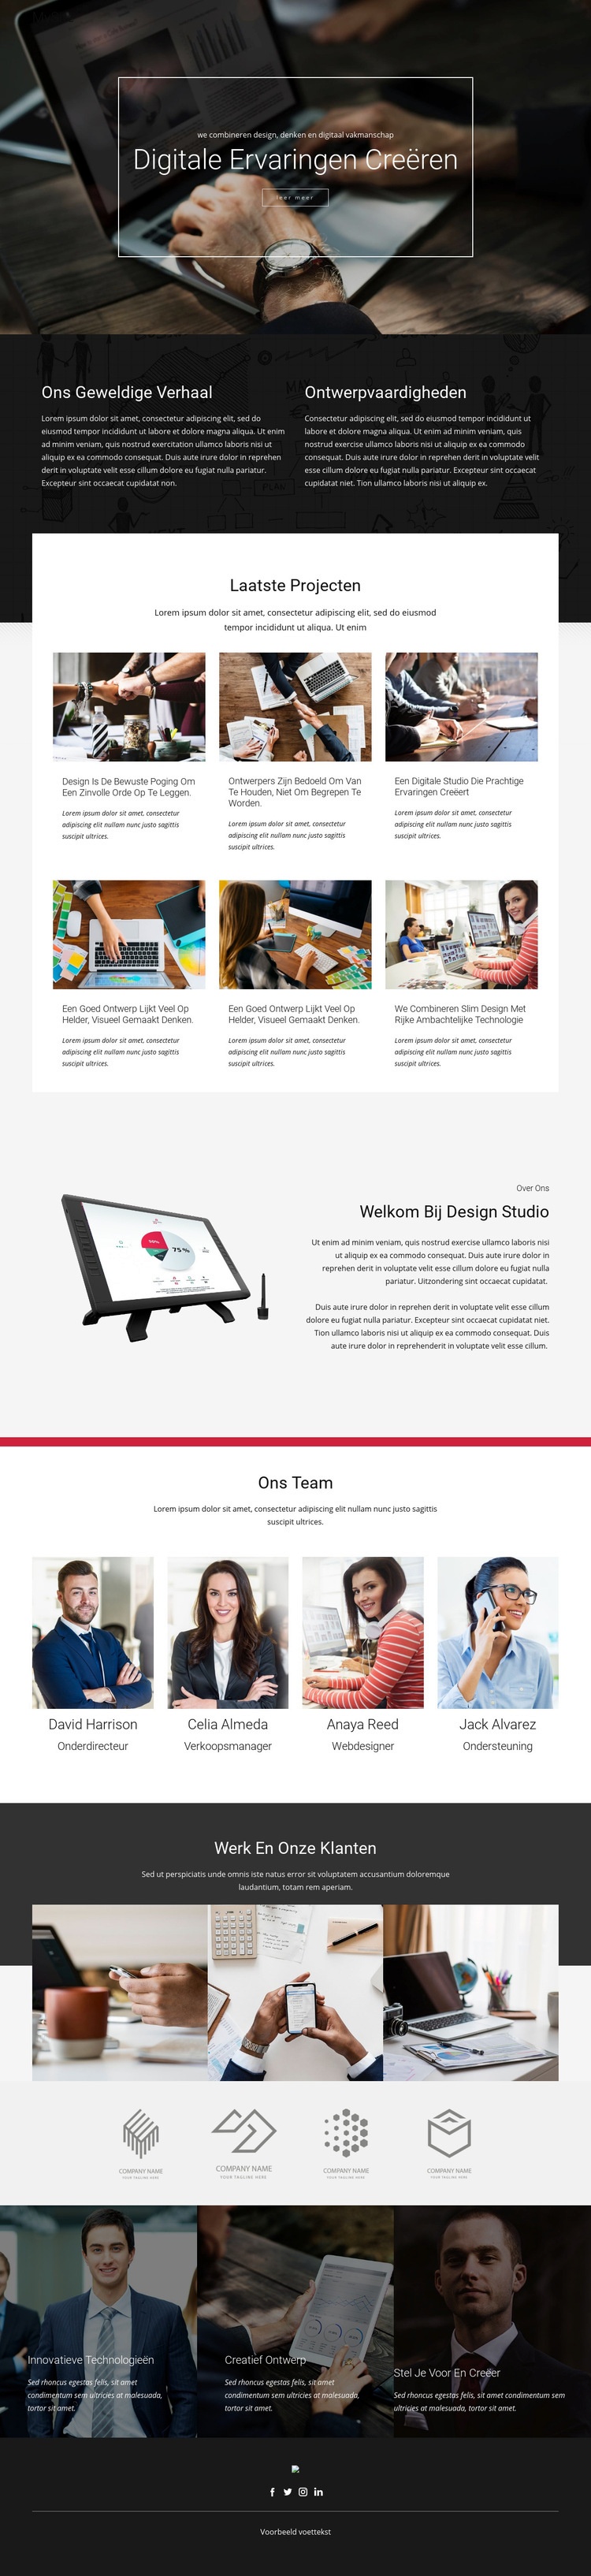 Crafting Digital Design Studio Website mockup